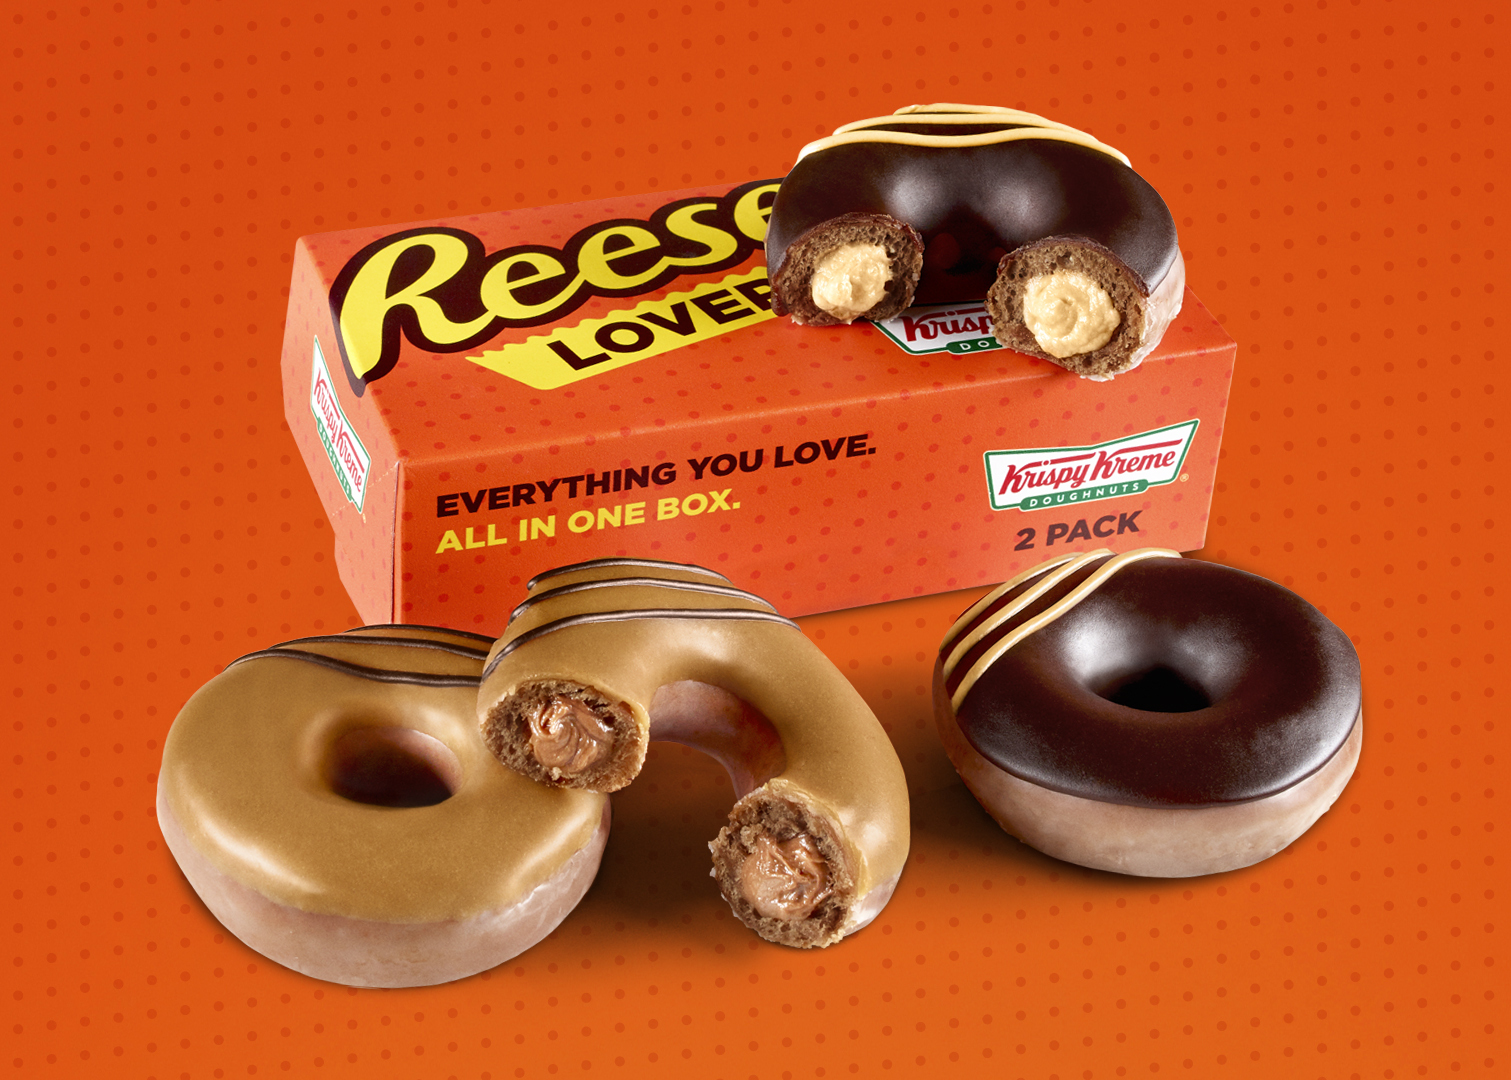 Krispy Kreme Reese's doughnuts